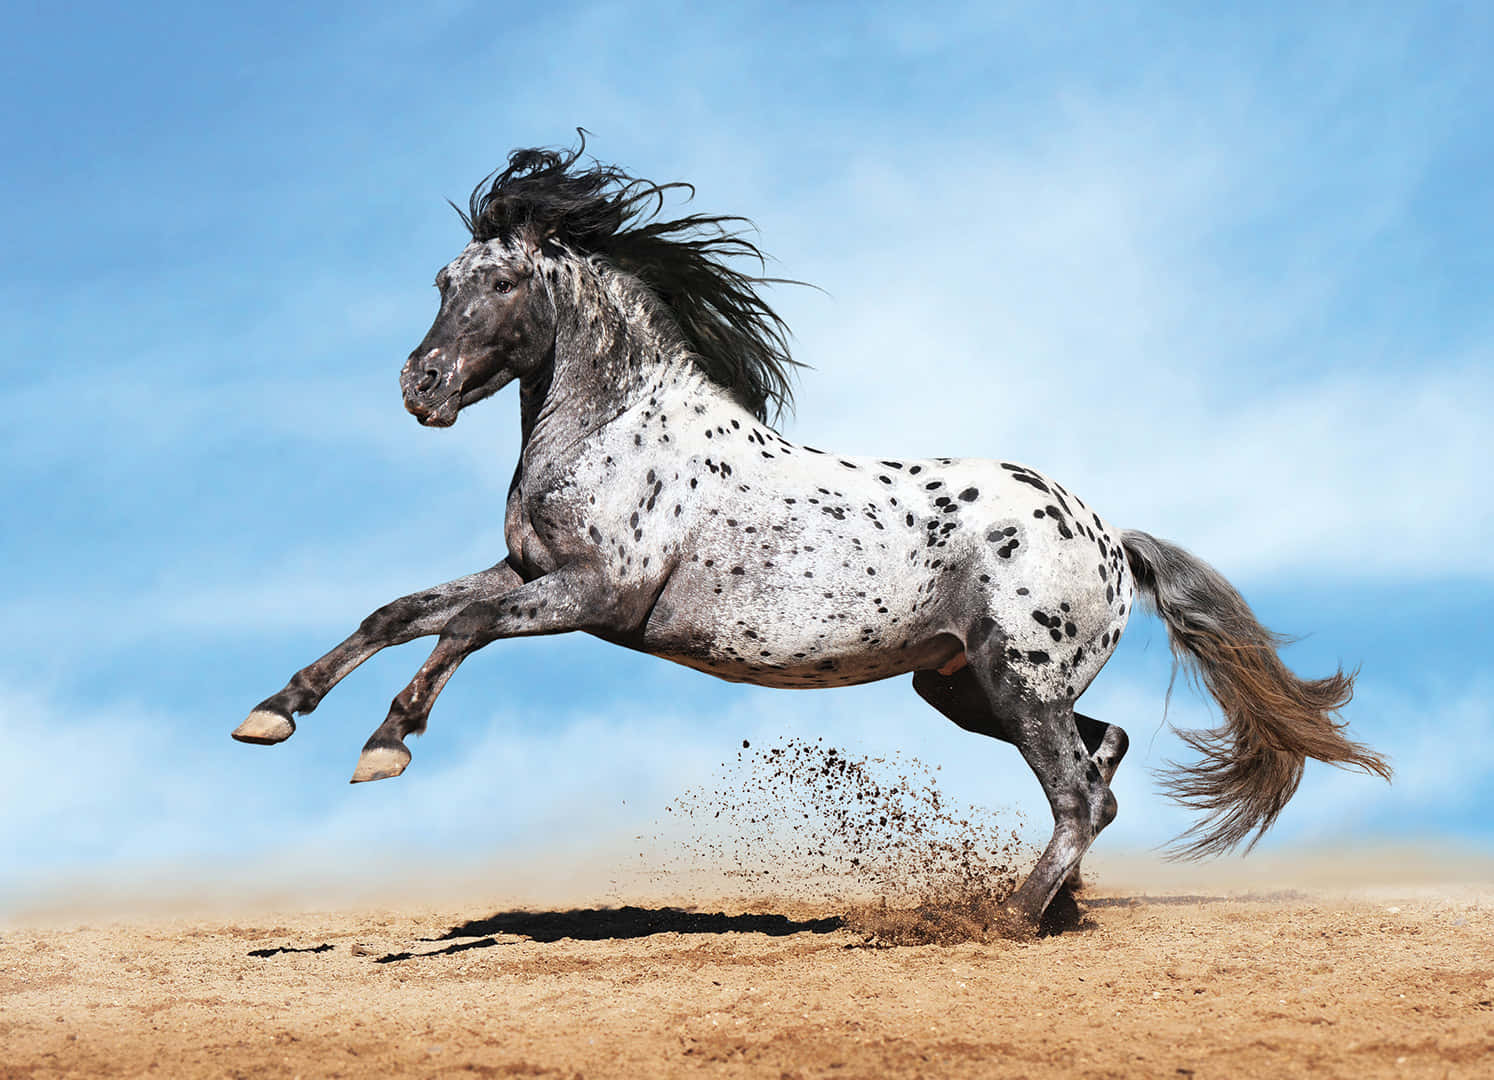 "Beautiful Appaloosa Horse Saddled Up and Ready to Ride"